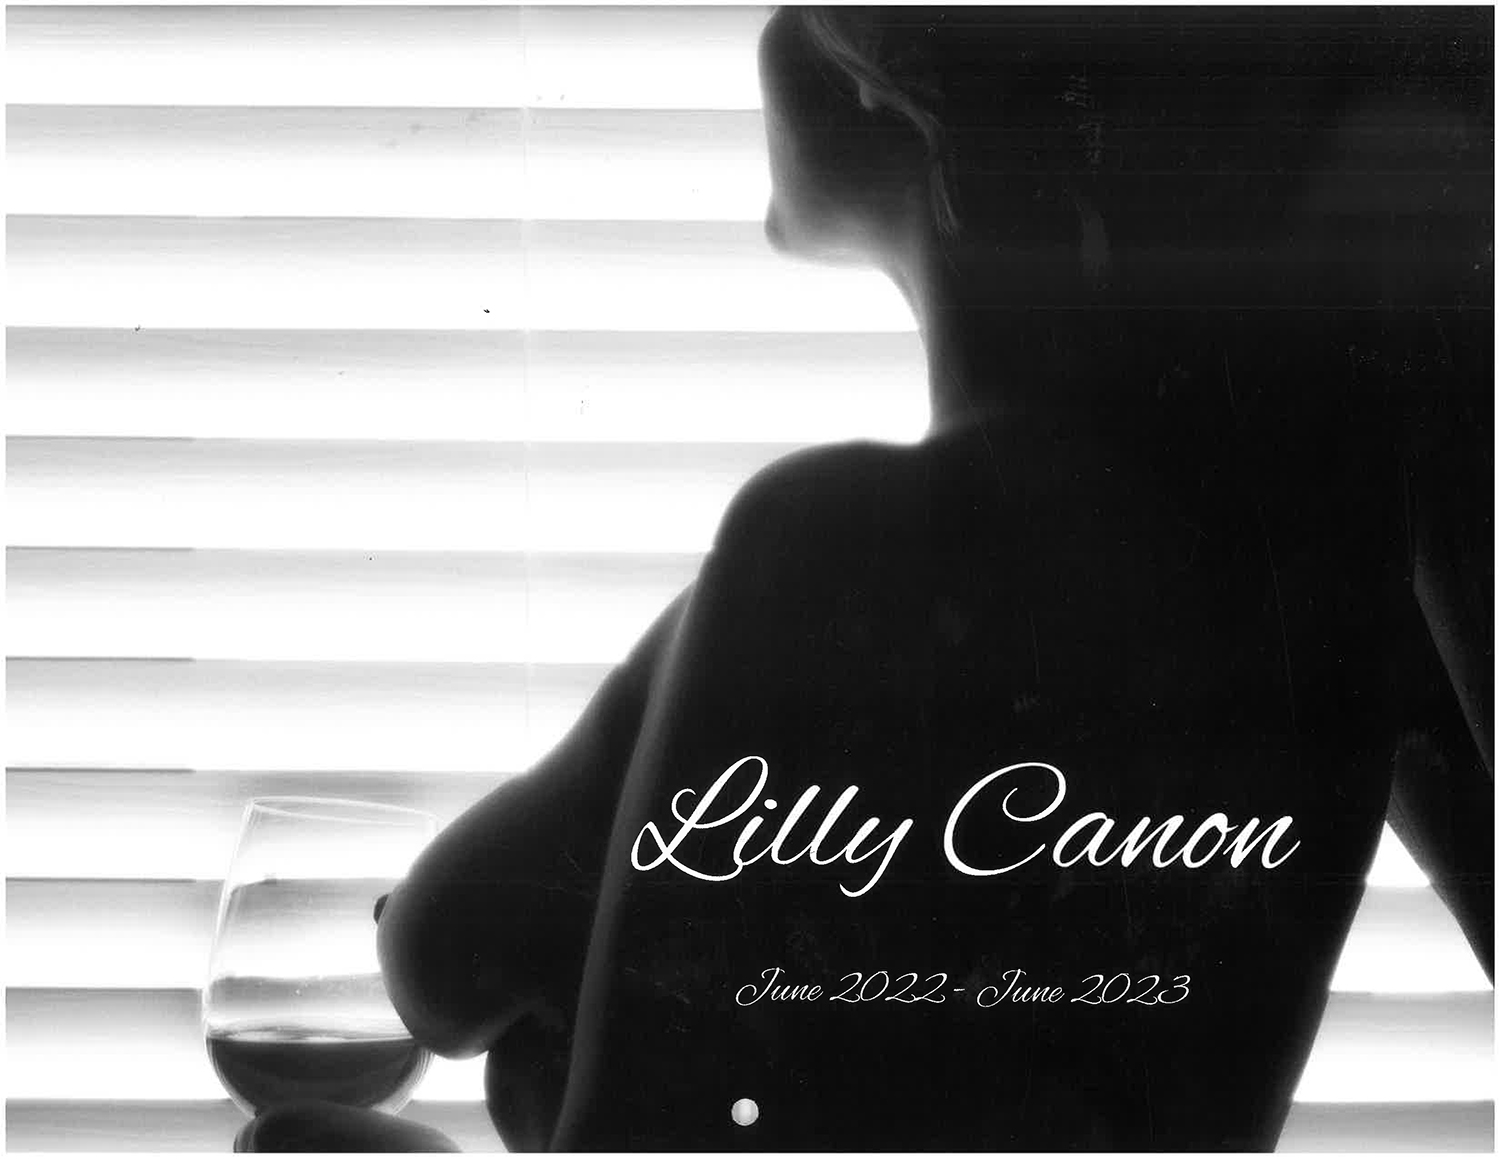 Lilly Canon 2022 Nude Calendar